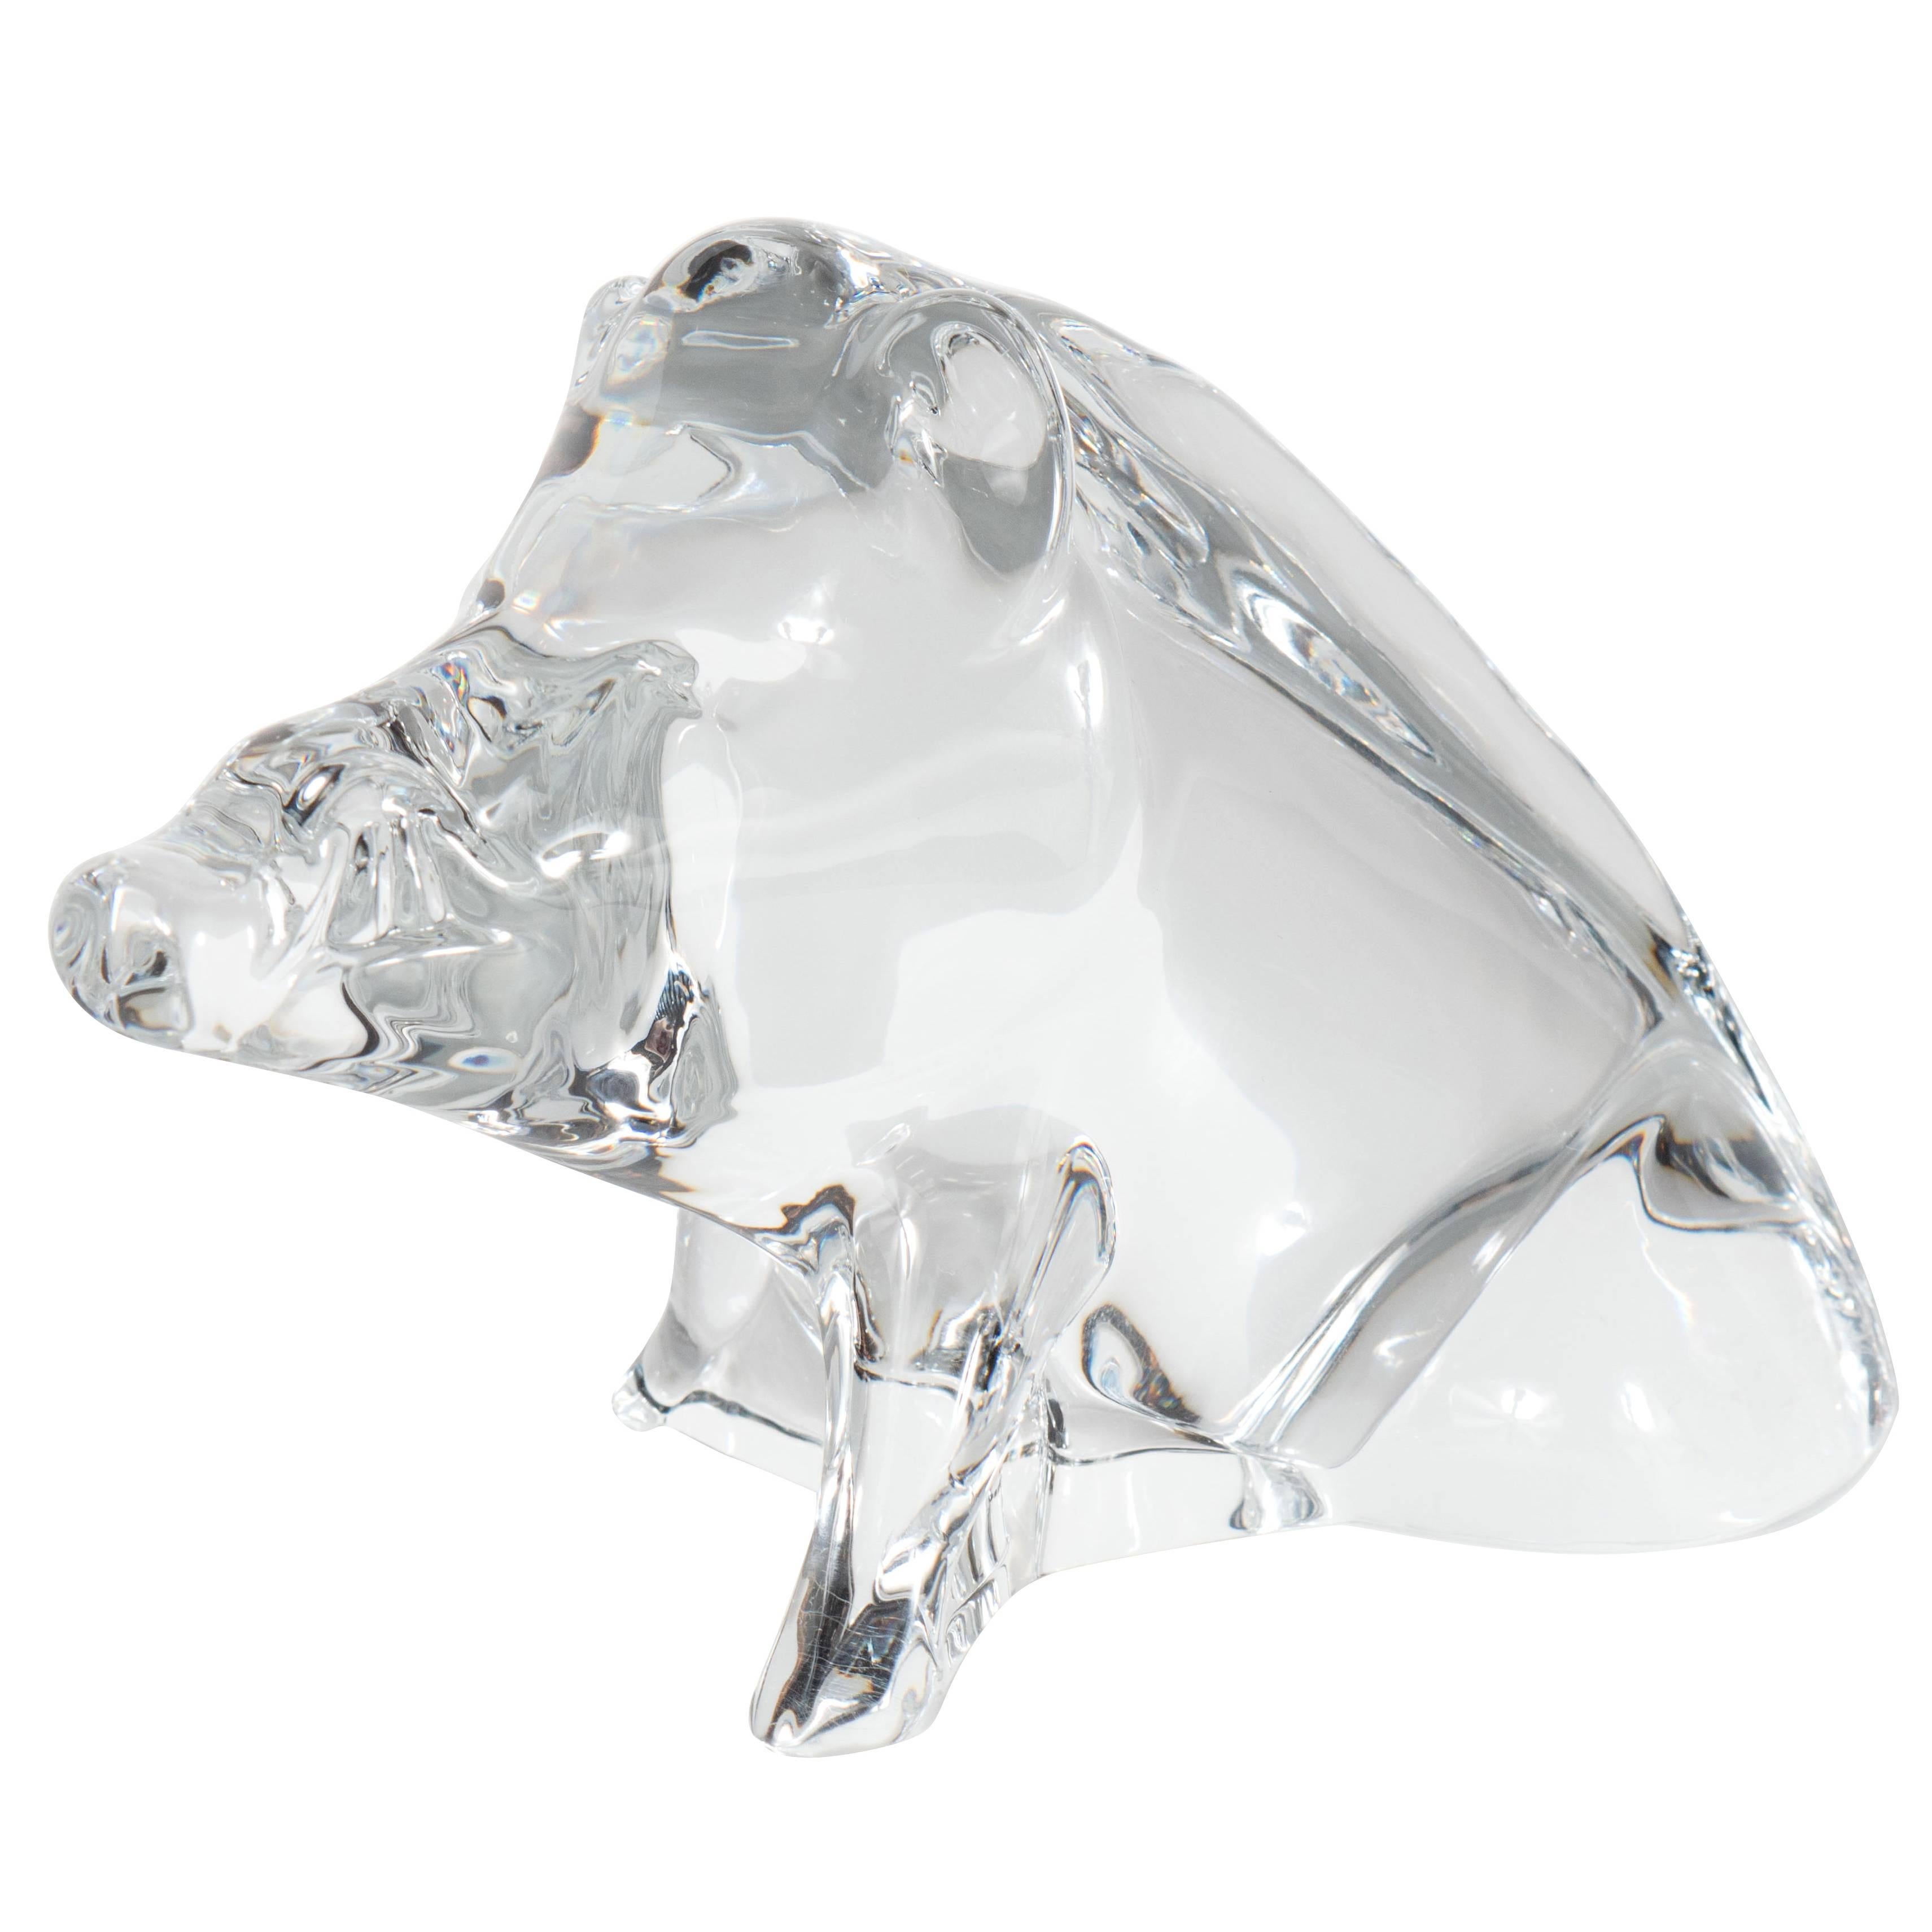 Modernist Baccarat Crystal Sculpture of a Wild Boar or a Razorback